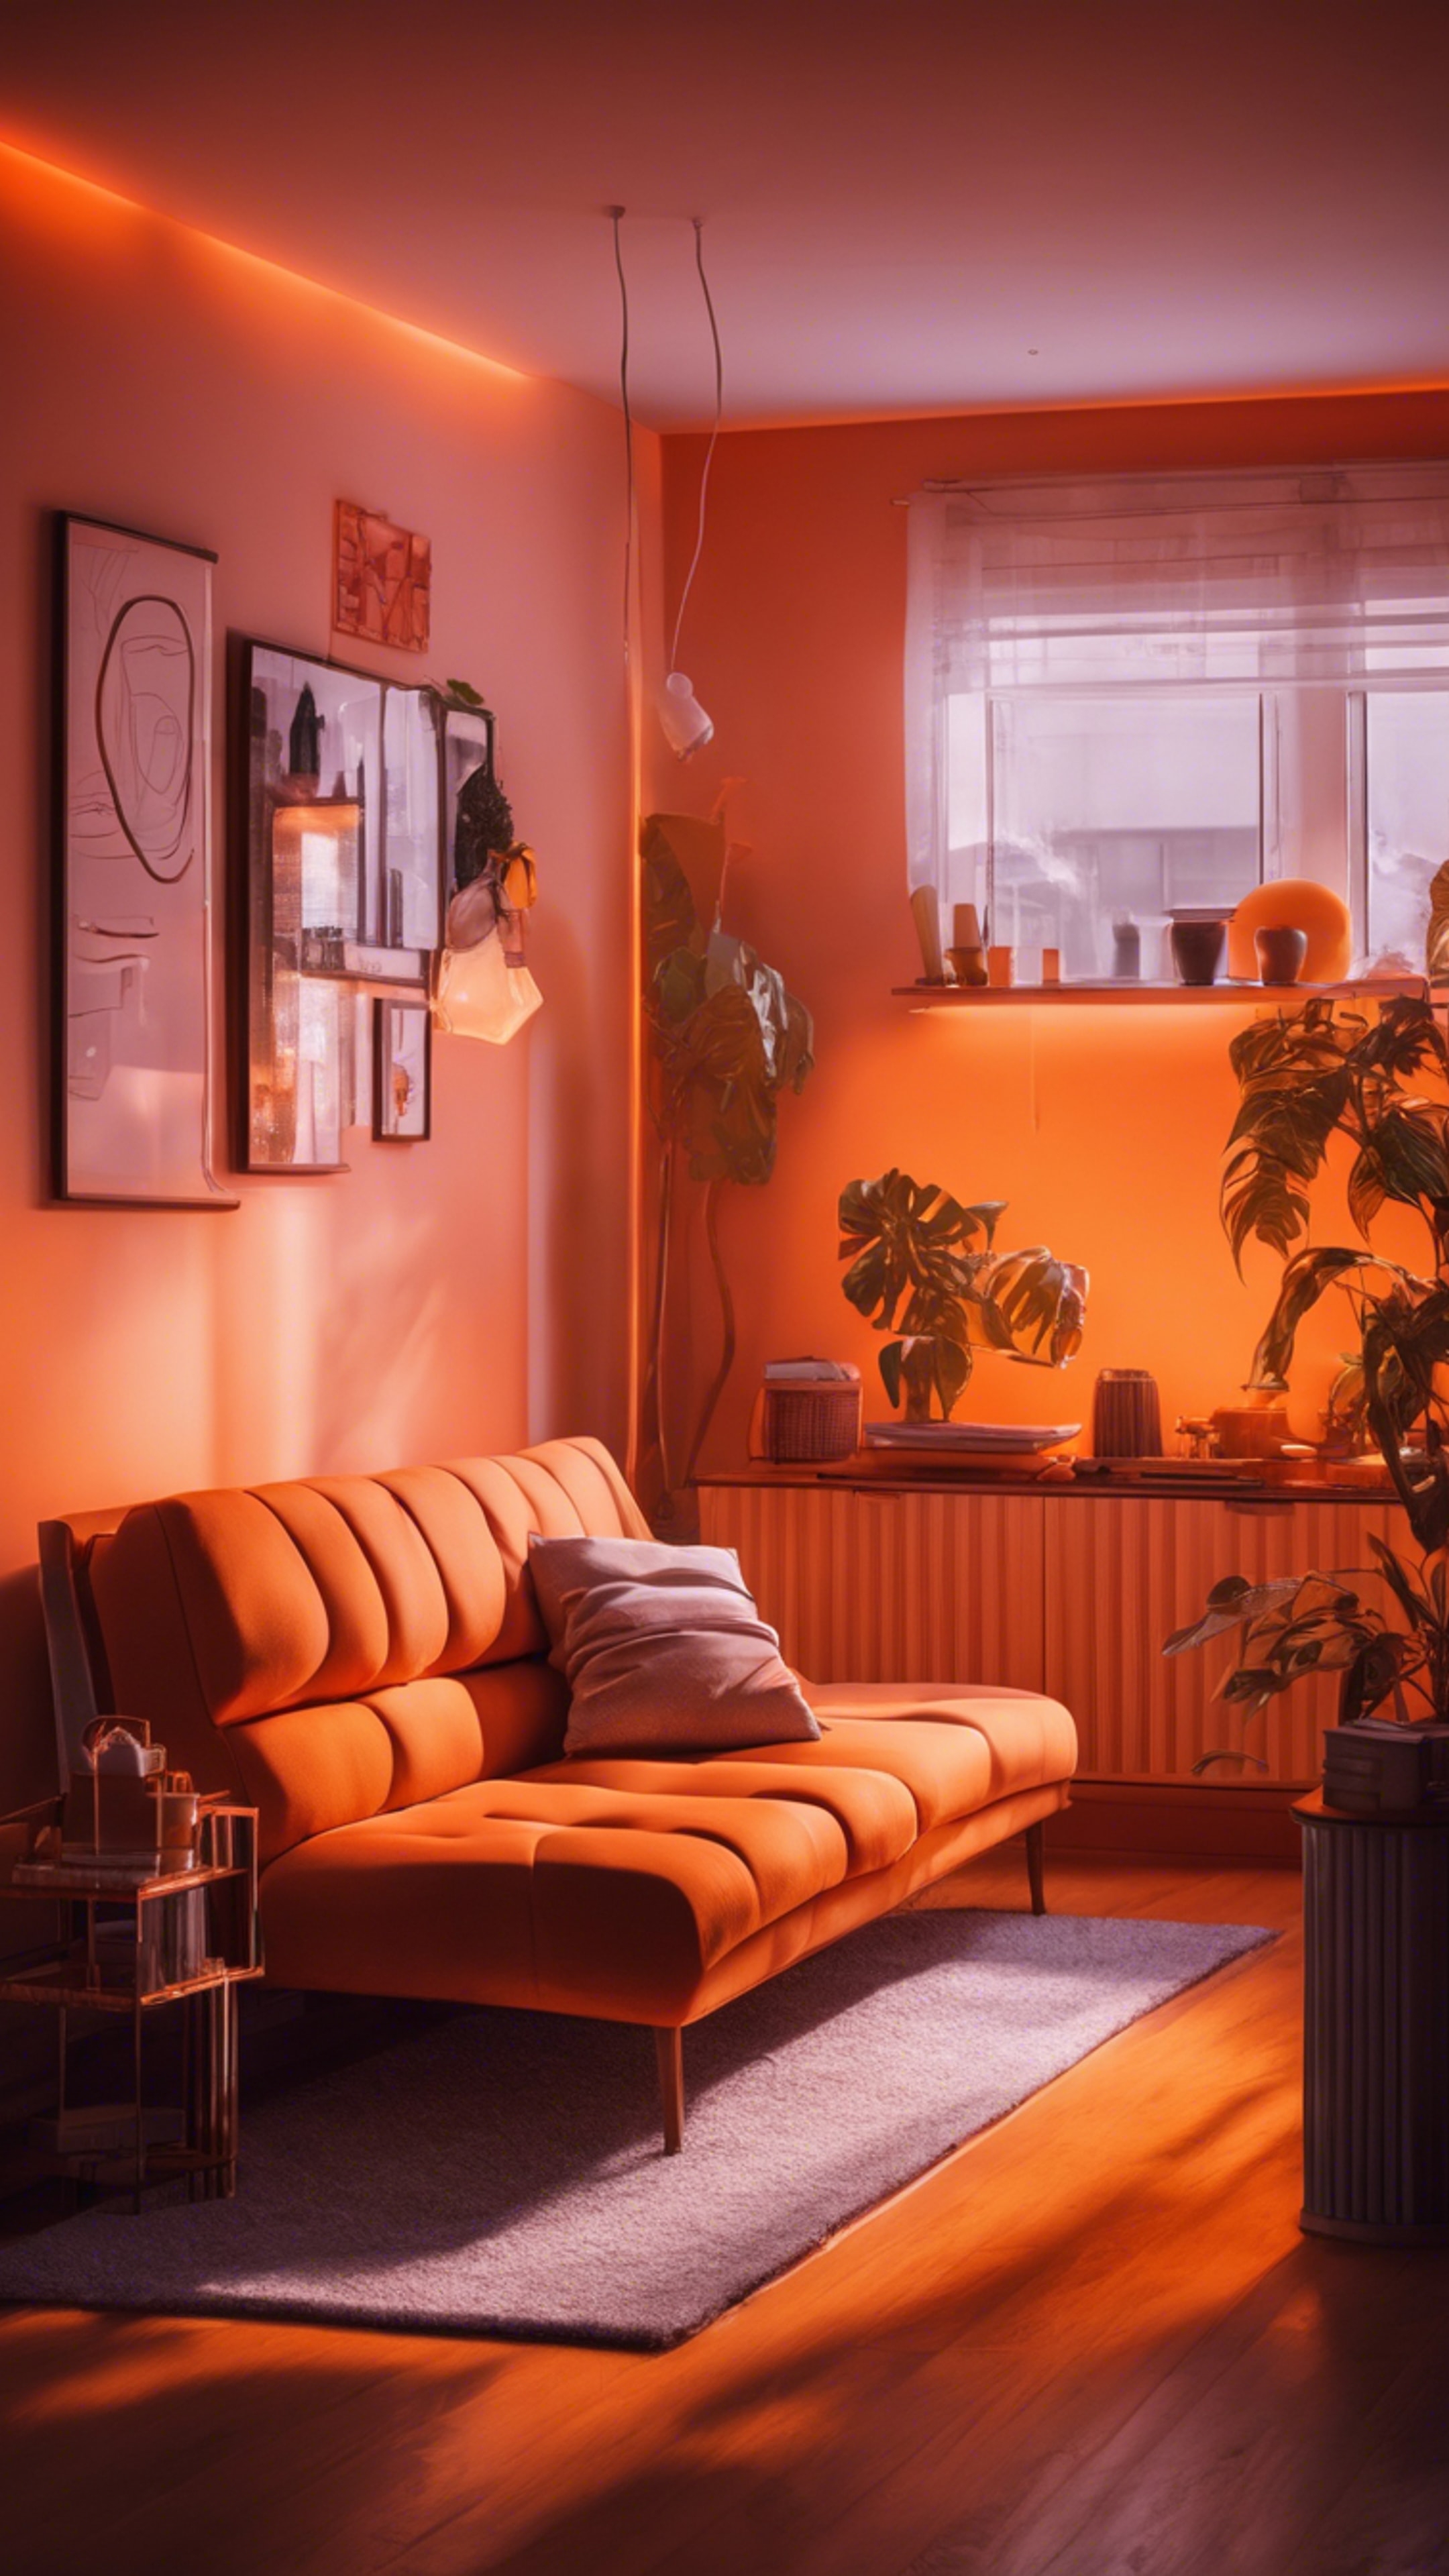 A fresh orange living room with trendy neon lights casting beautiful shadows. 벽지[39213640e9864c1aa0c4]